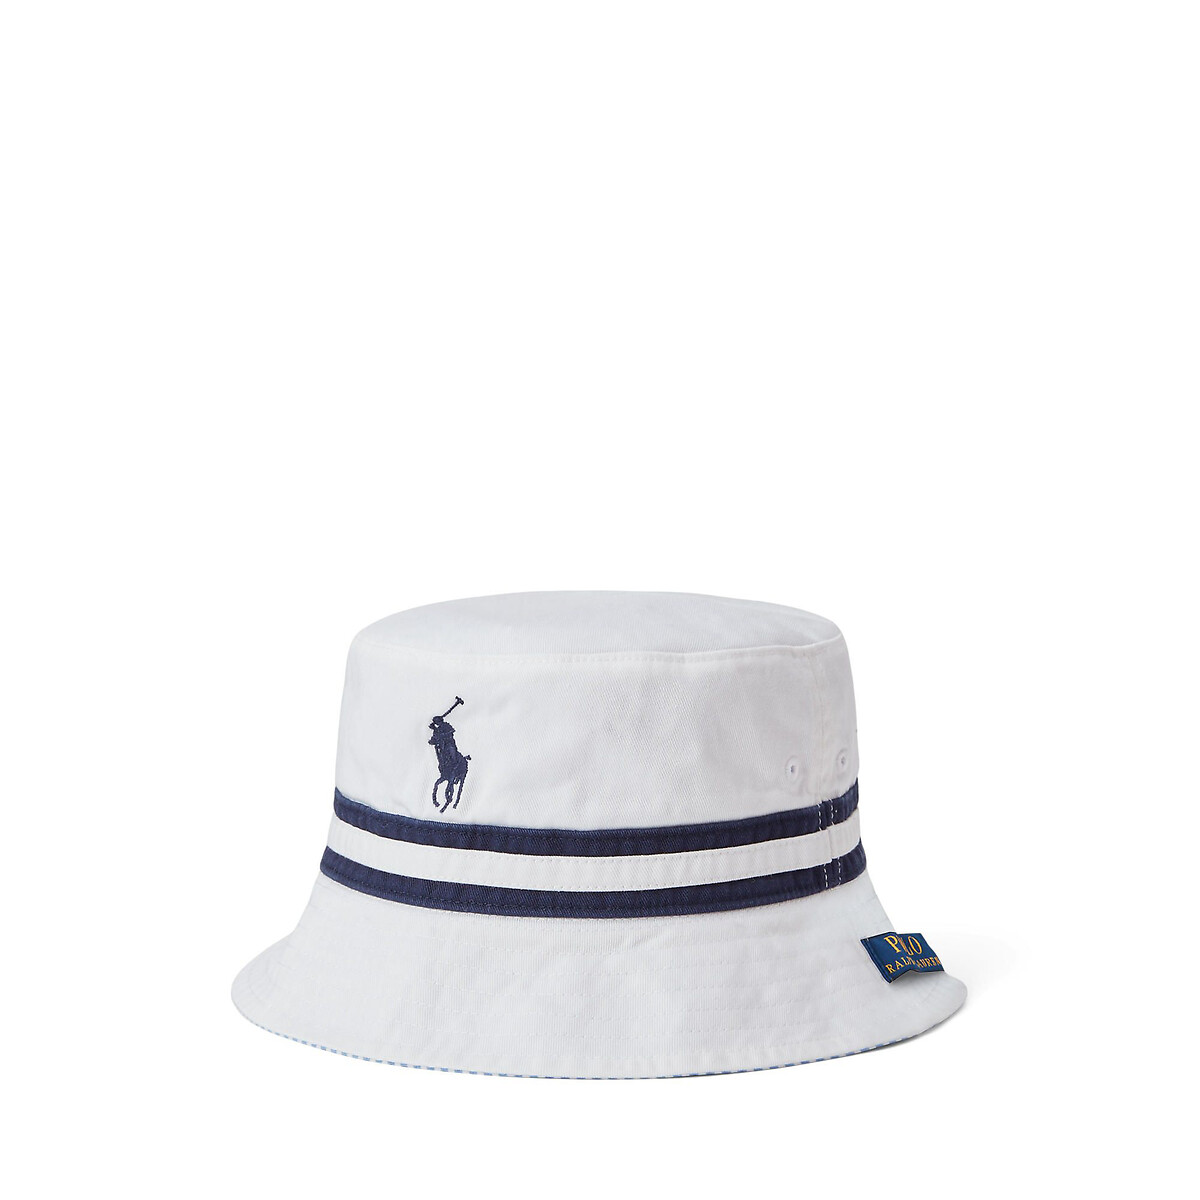 Шляпа-боб двухсторонняя из тонкой полосатой ткани  L/XL белый LaRedoute, размер L/XL Шляпа-боб двухсторонняя из тонкой полосатой ткани  L/XL белый - фото 3